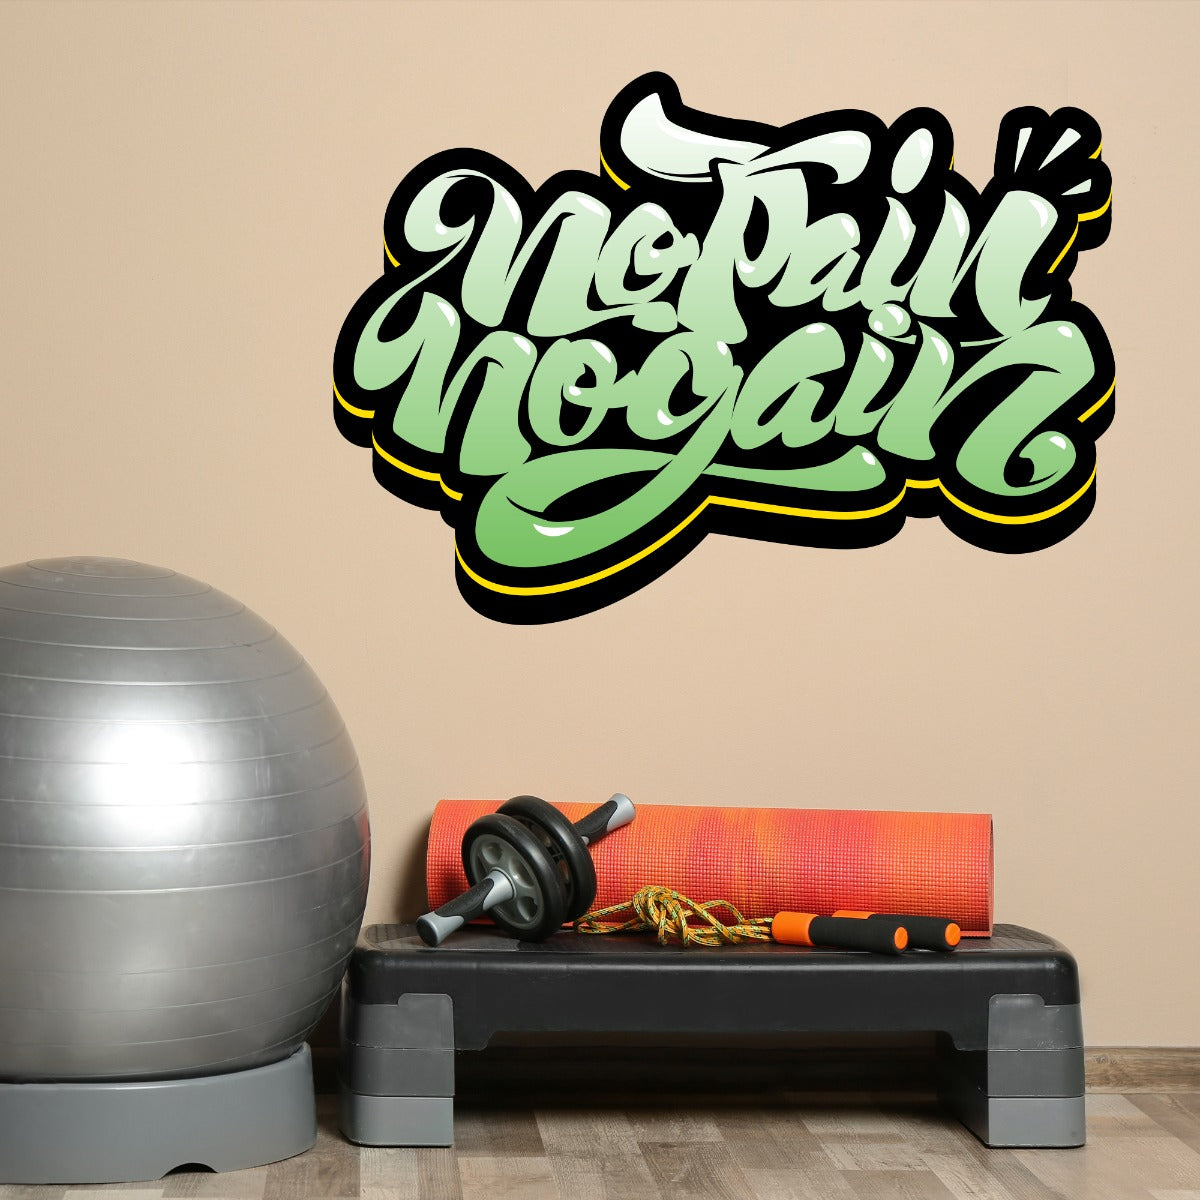 Gym Wall Sticker - No Pain No Gain Graffiti